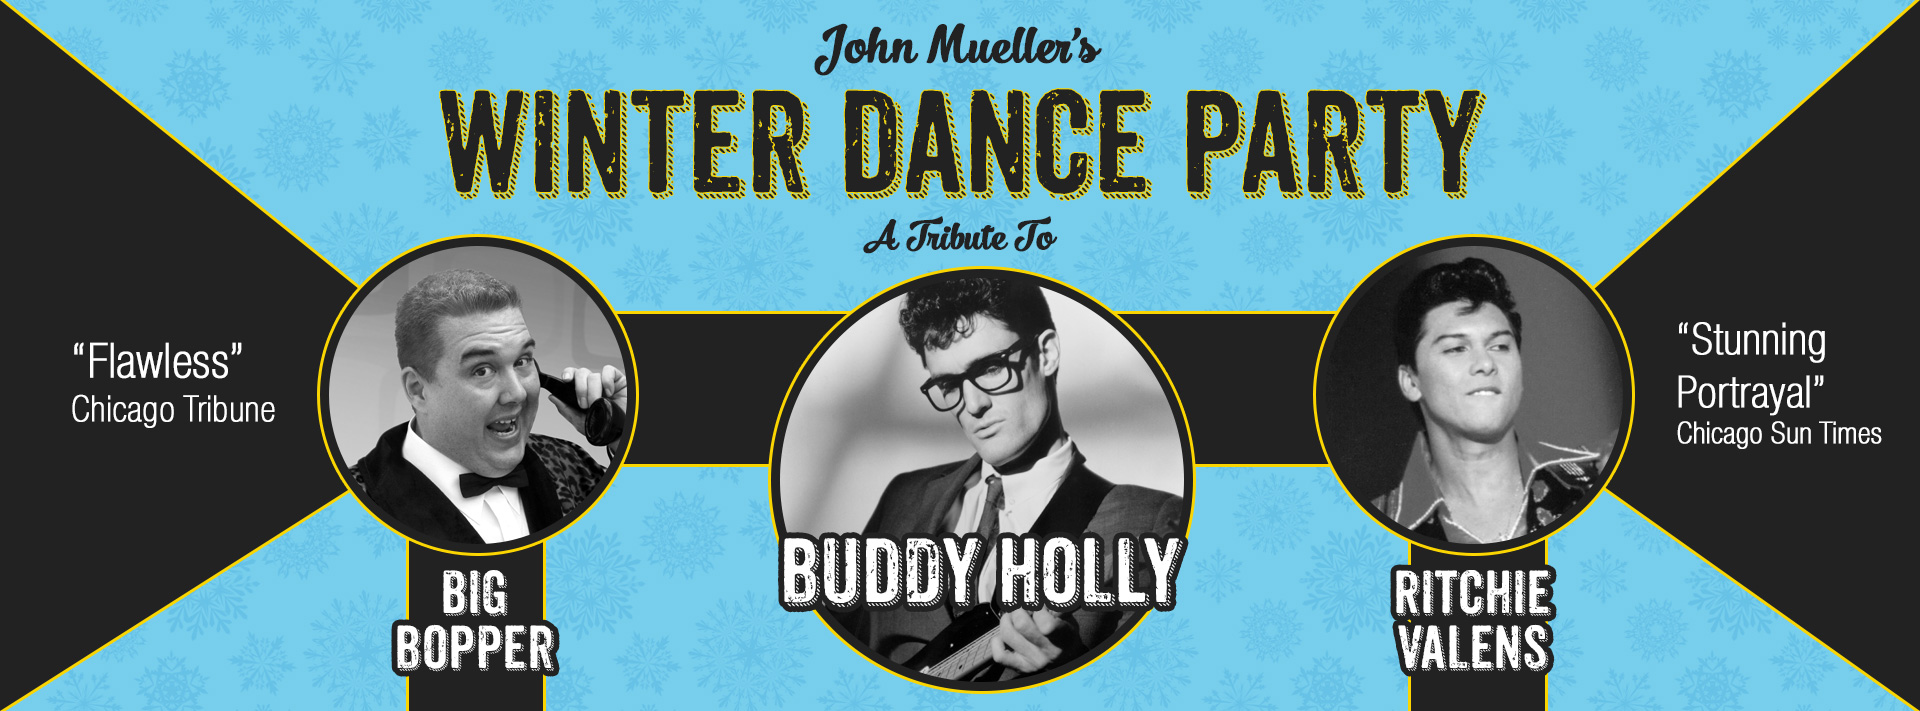 John Mueller's Winter Dance Party®